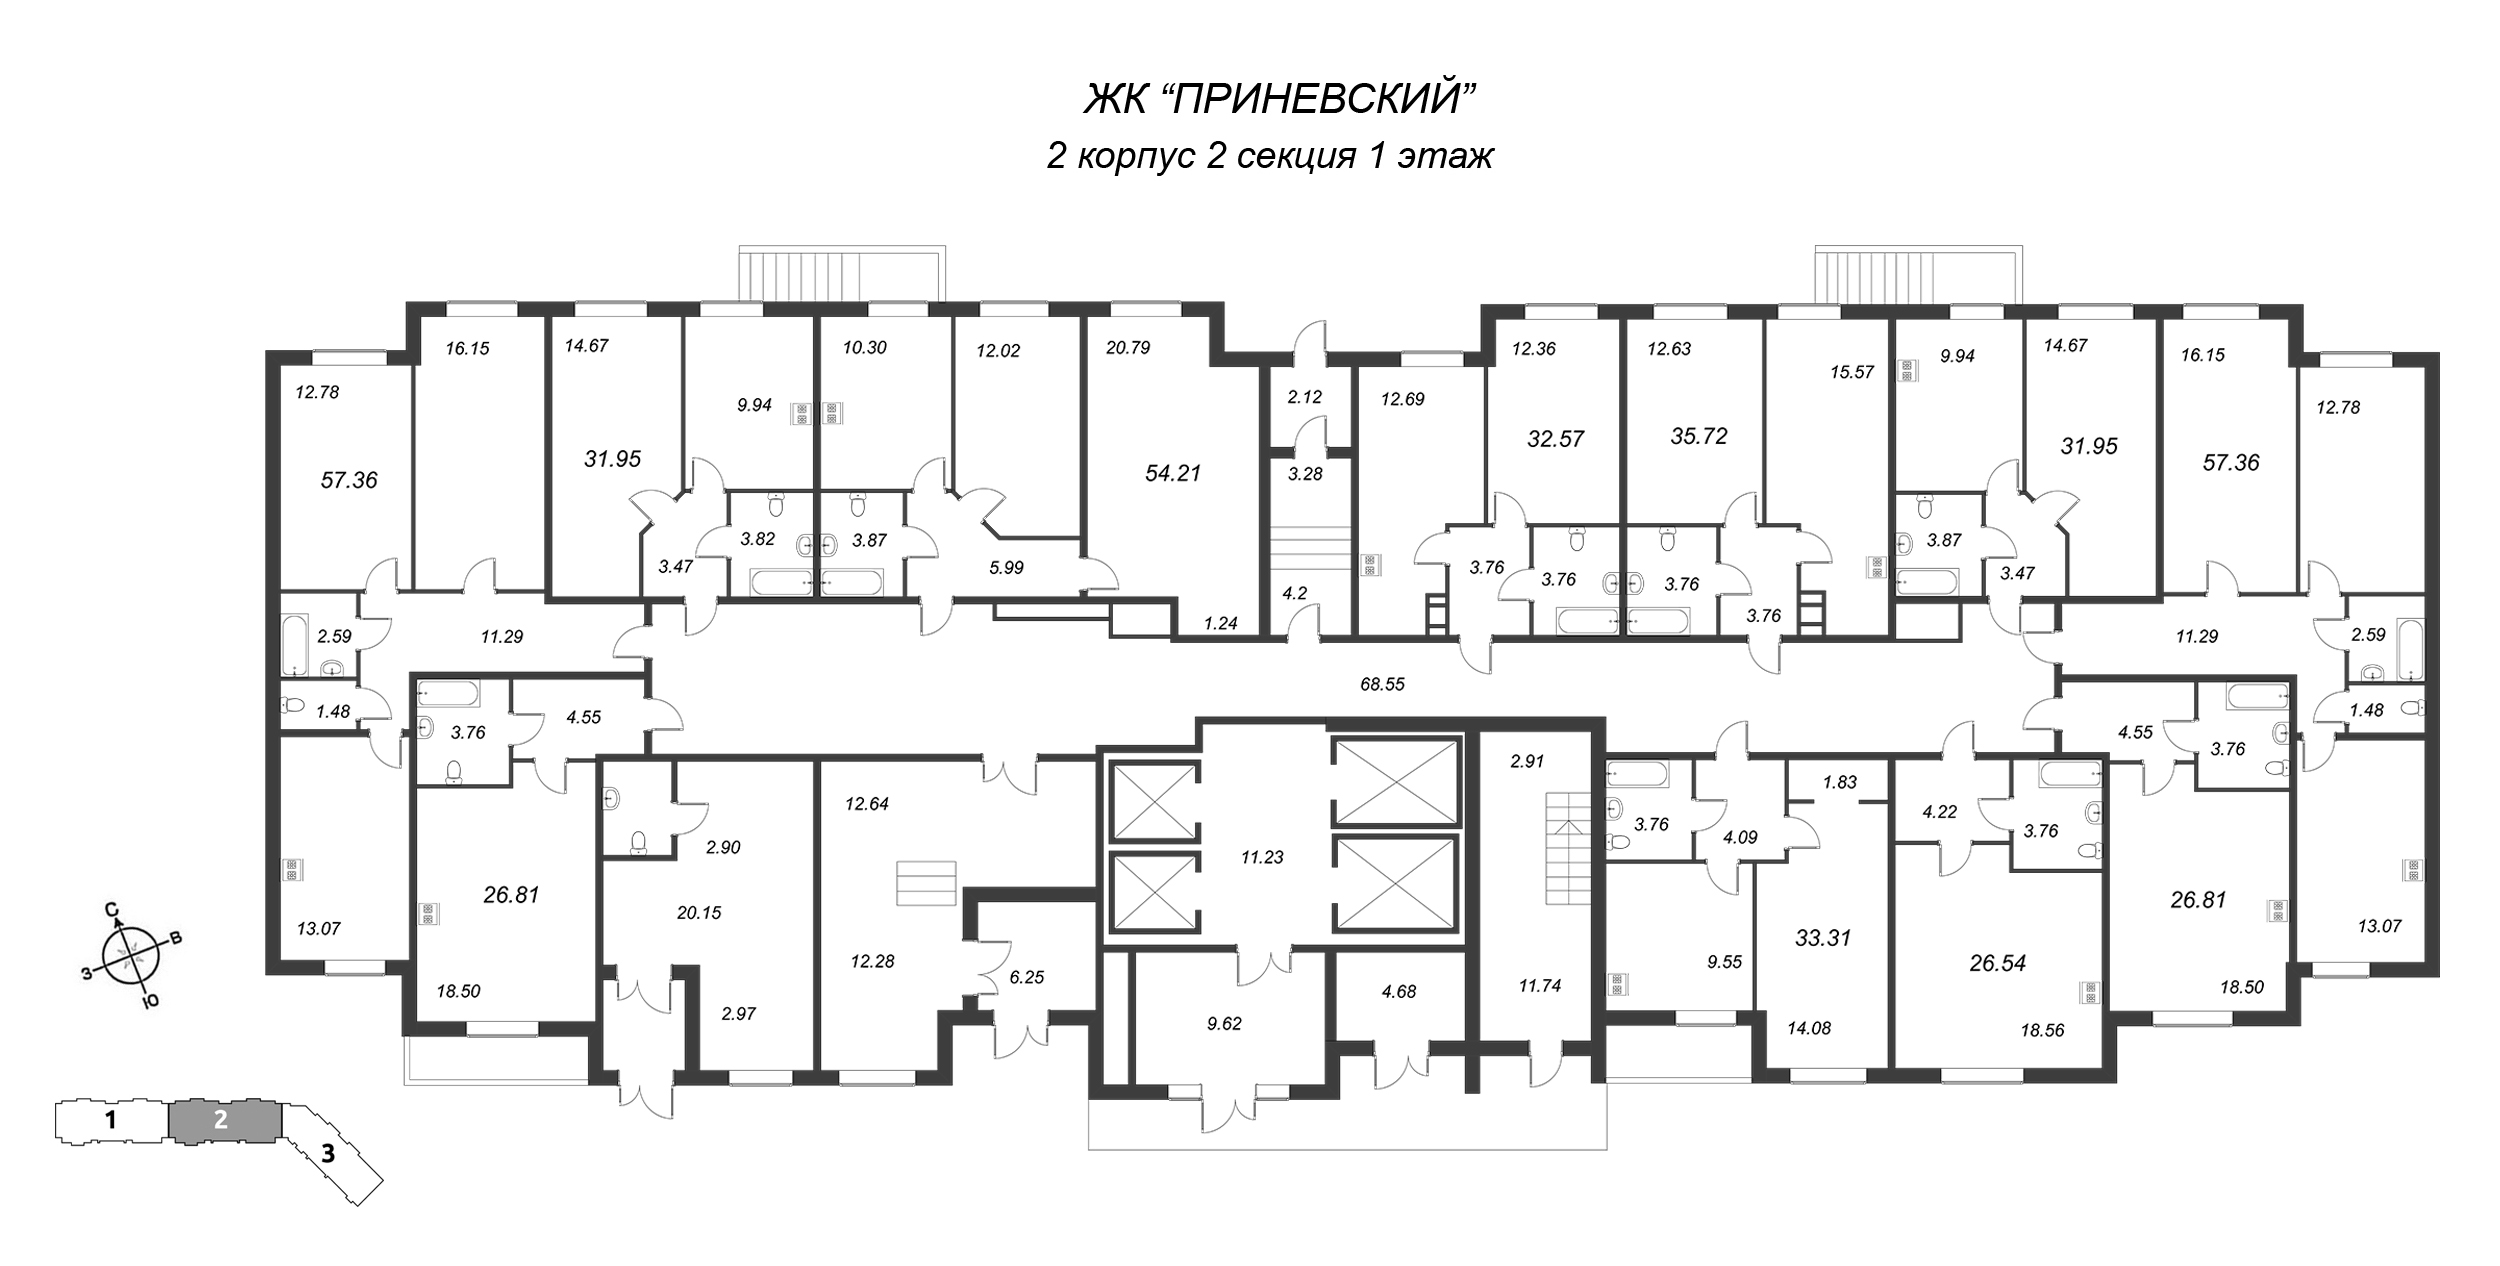 2-комнатная (Евро) квартира, 32.57 м² - планировка этажа